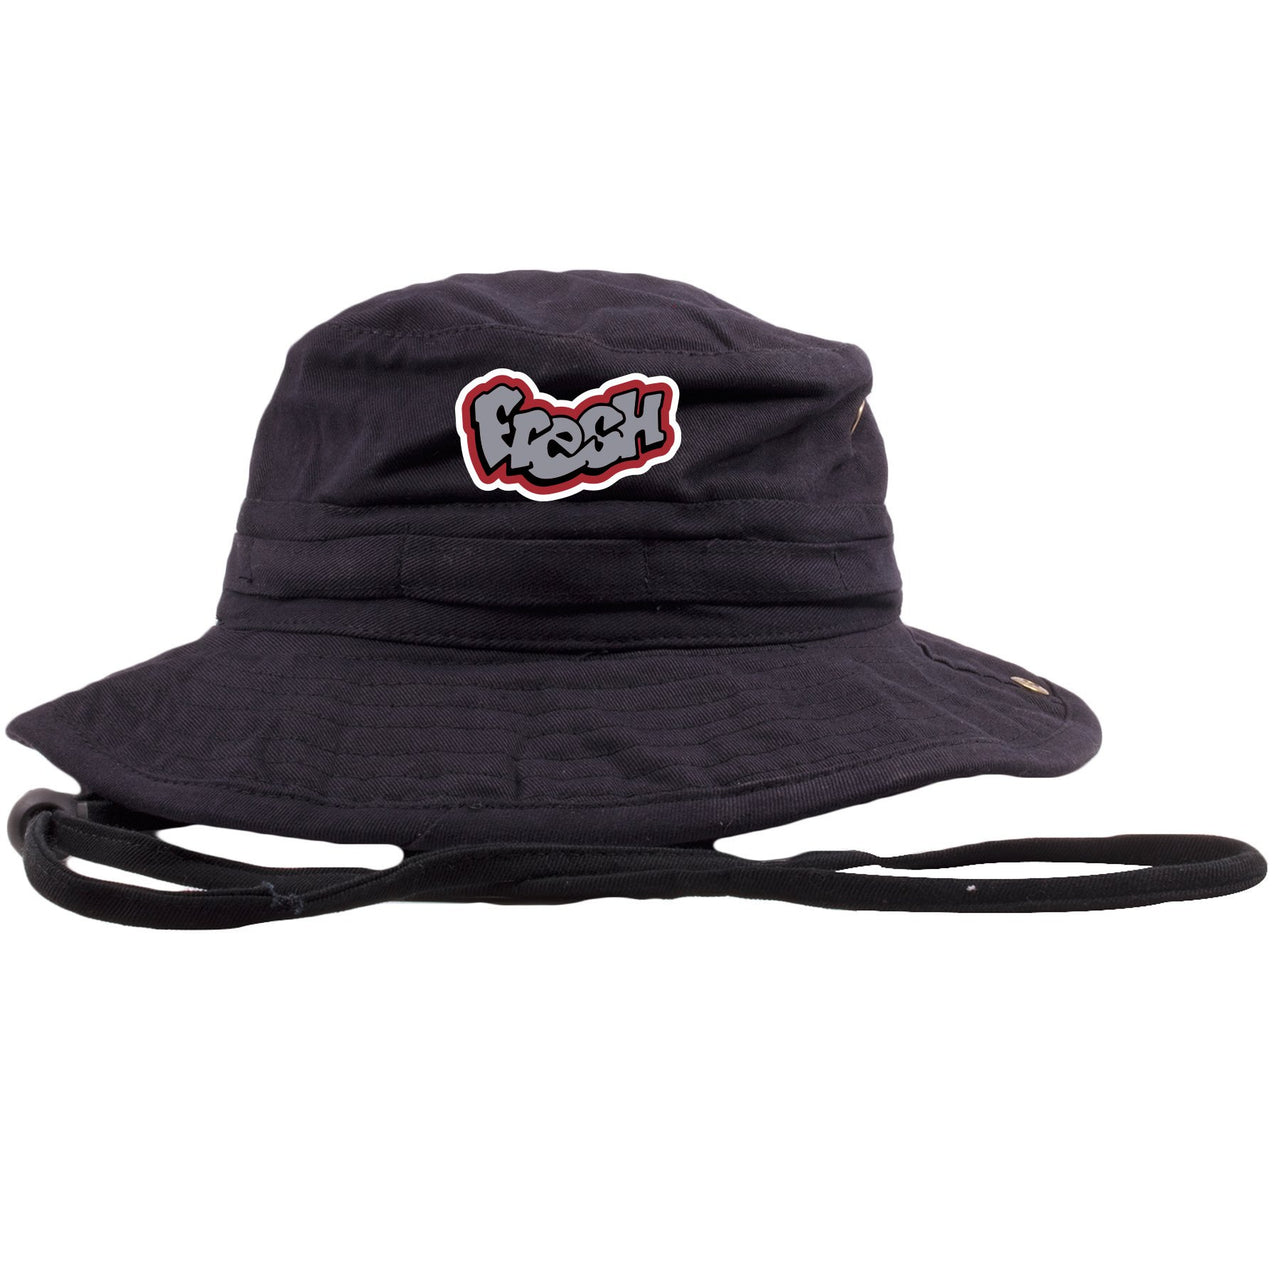 Bred 2019 4s Bucket Hat | Fresh Logo, Black